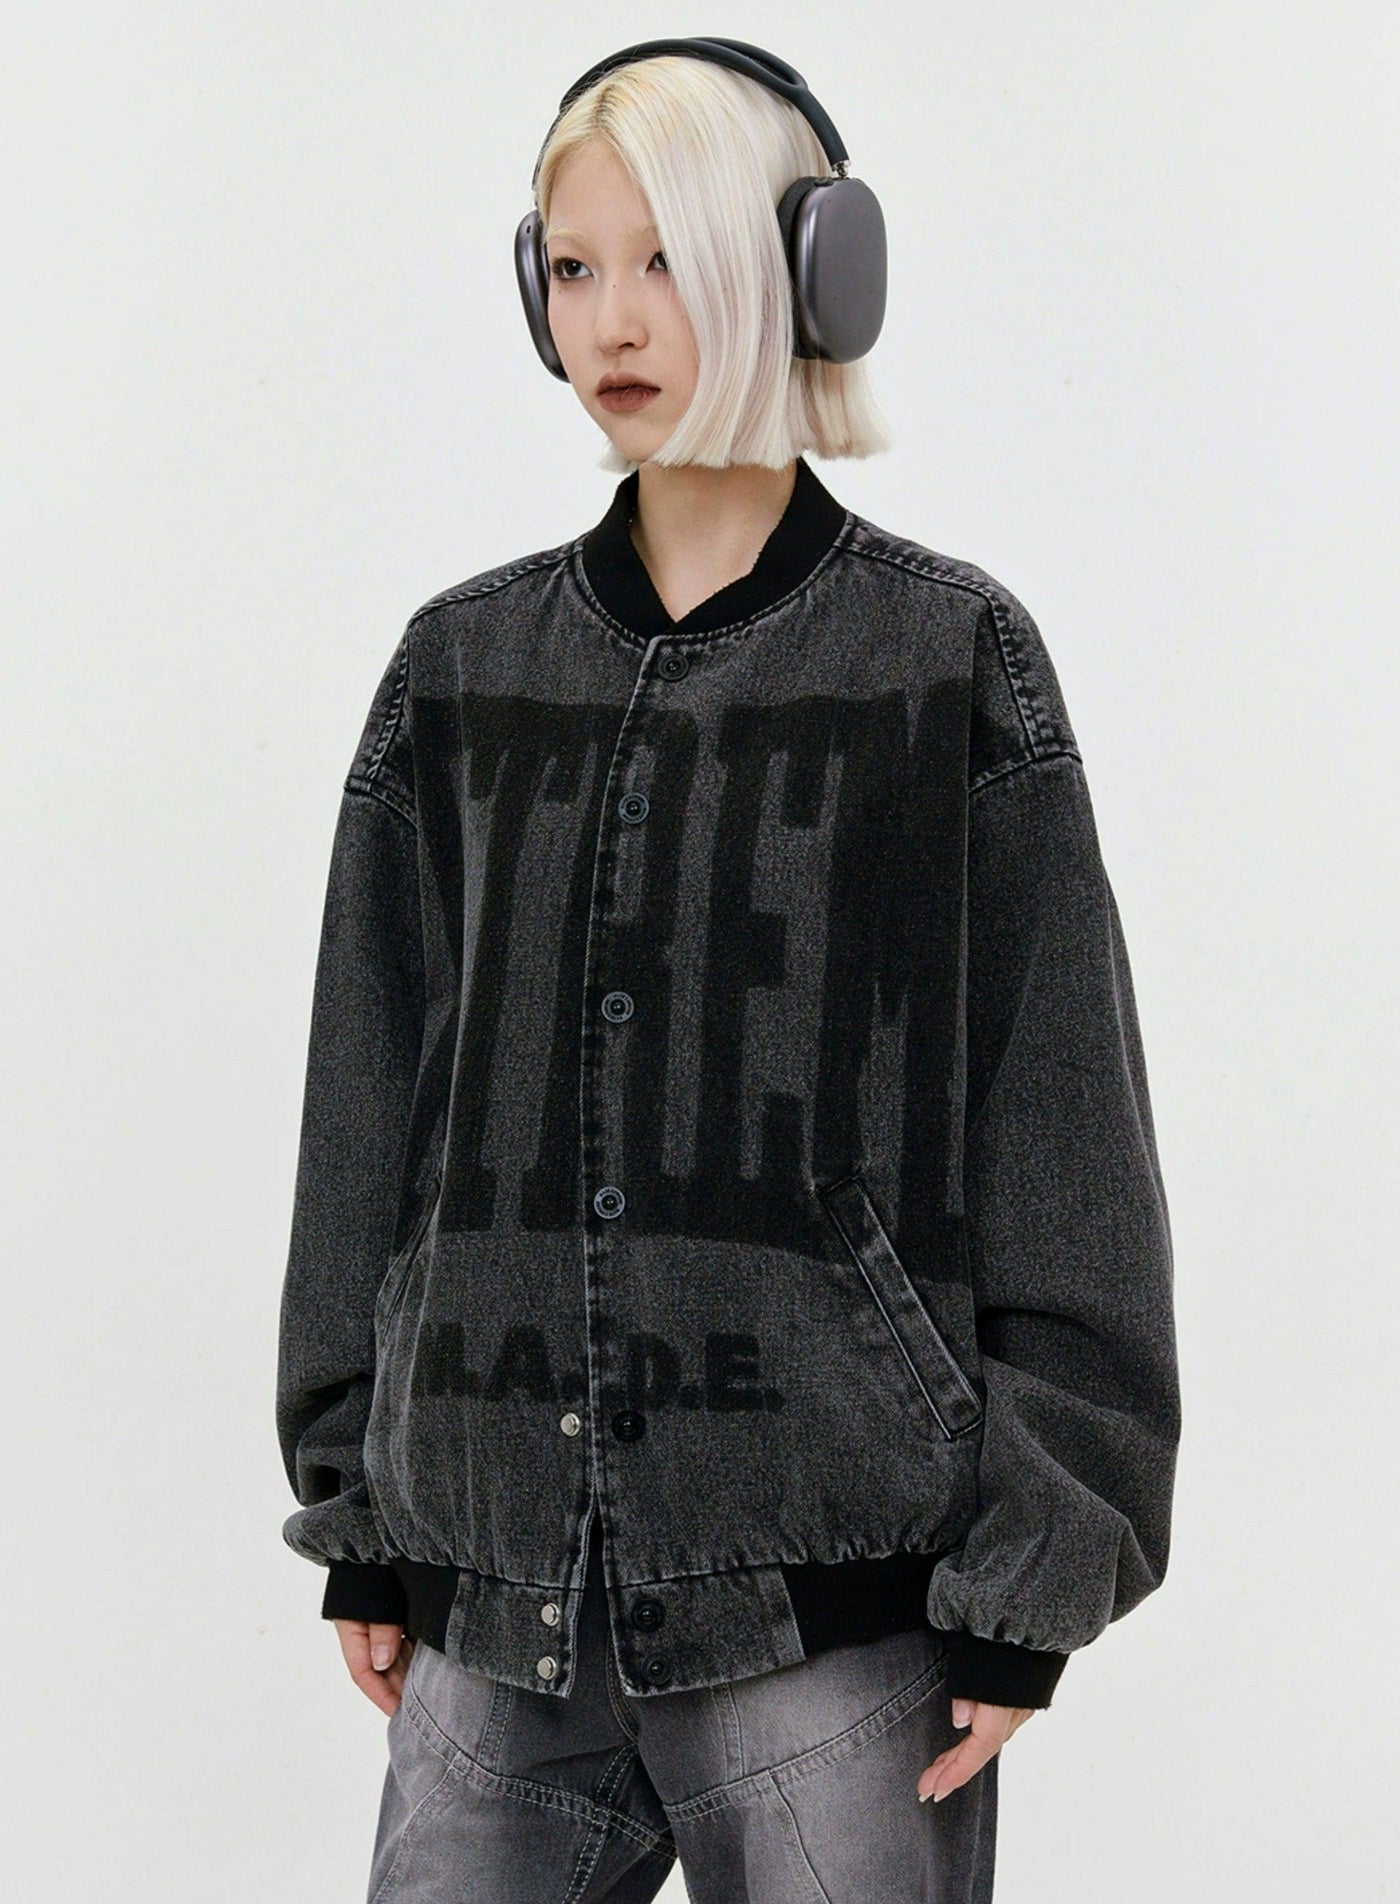 Distressed Printed Denim Jacket Korean Street Fashion Jacket By Made Extreme Shop Online at OH Vault